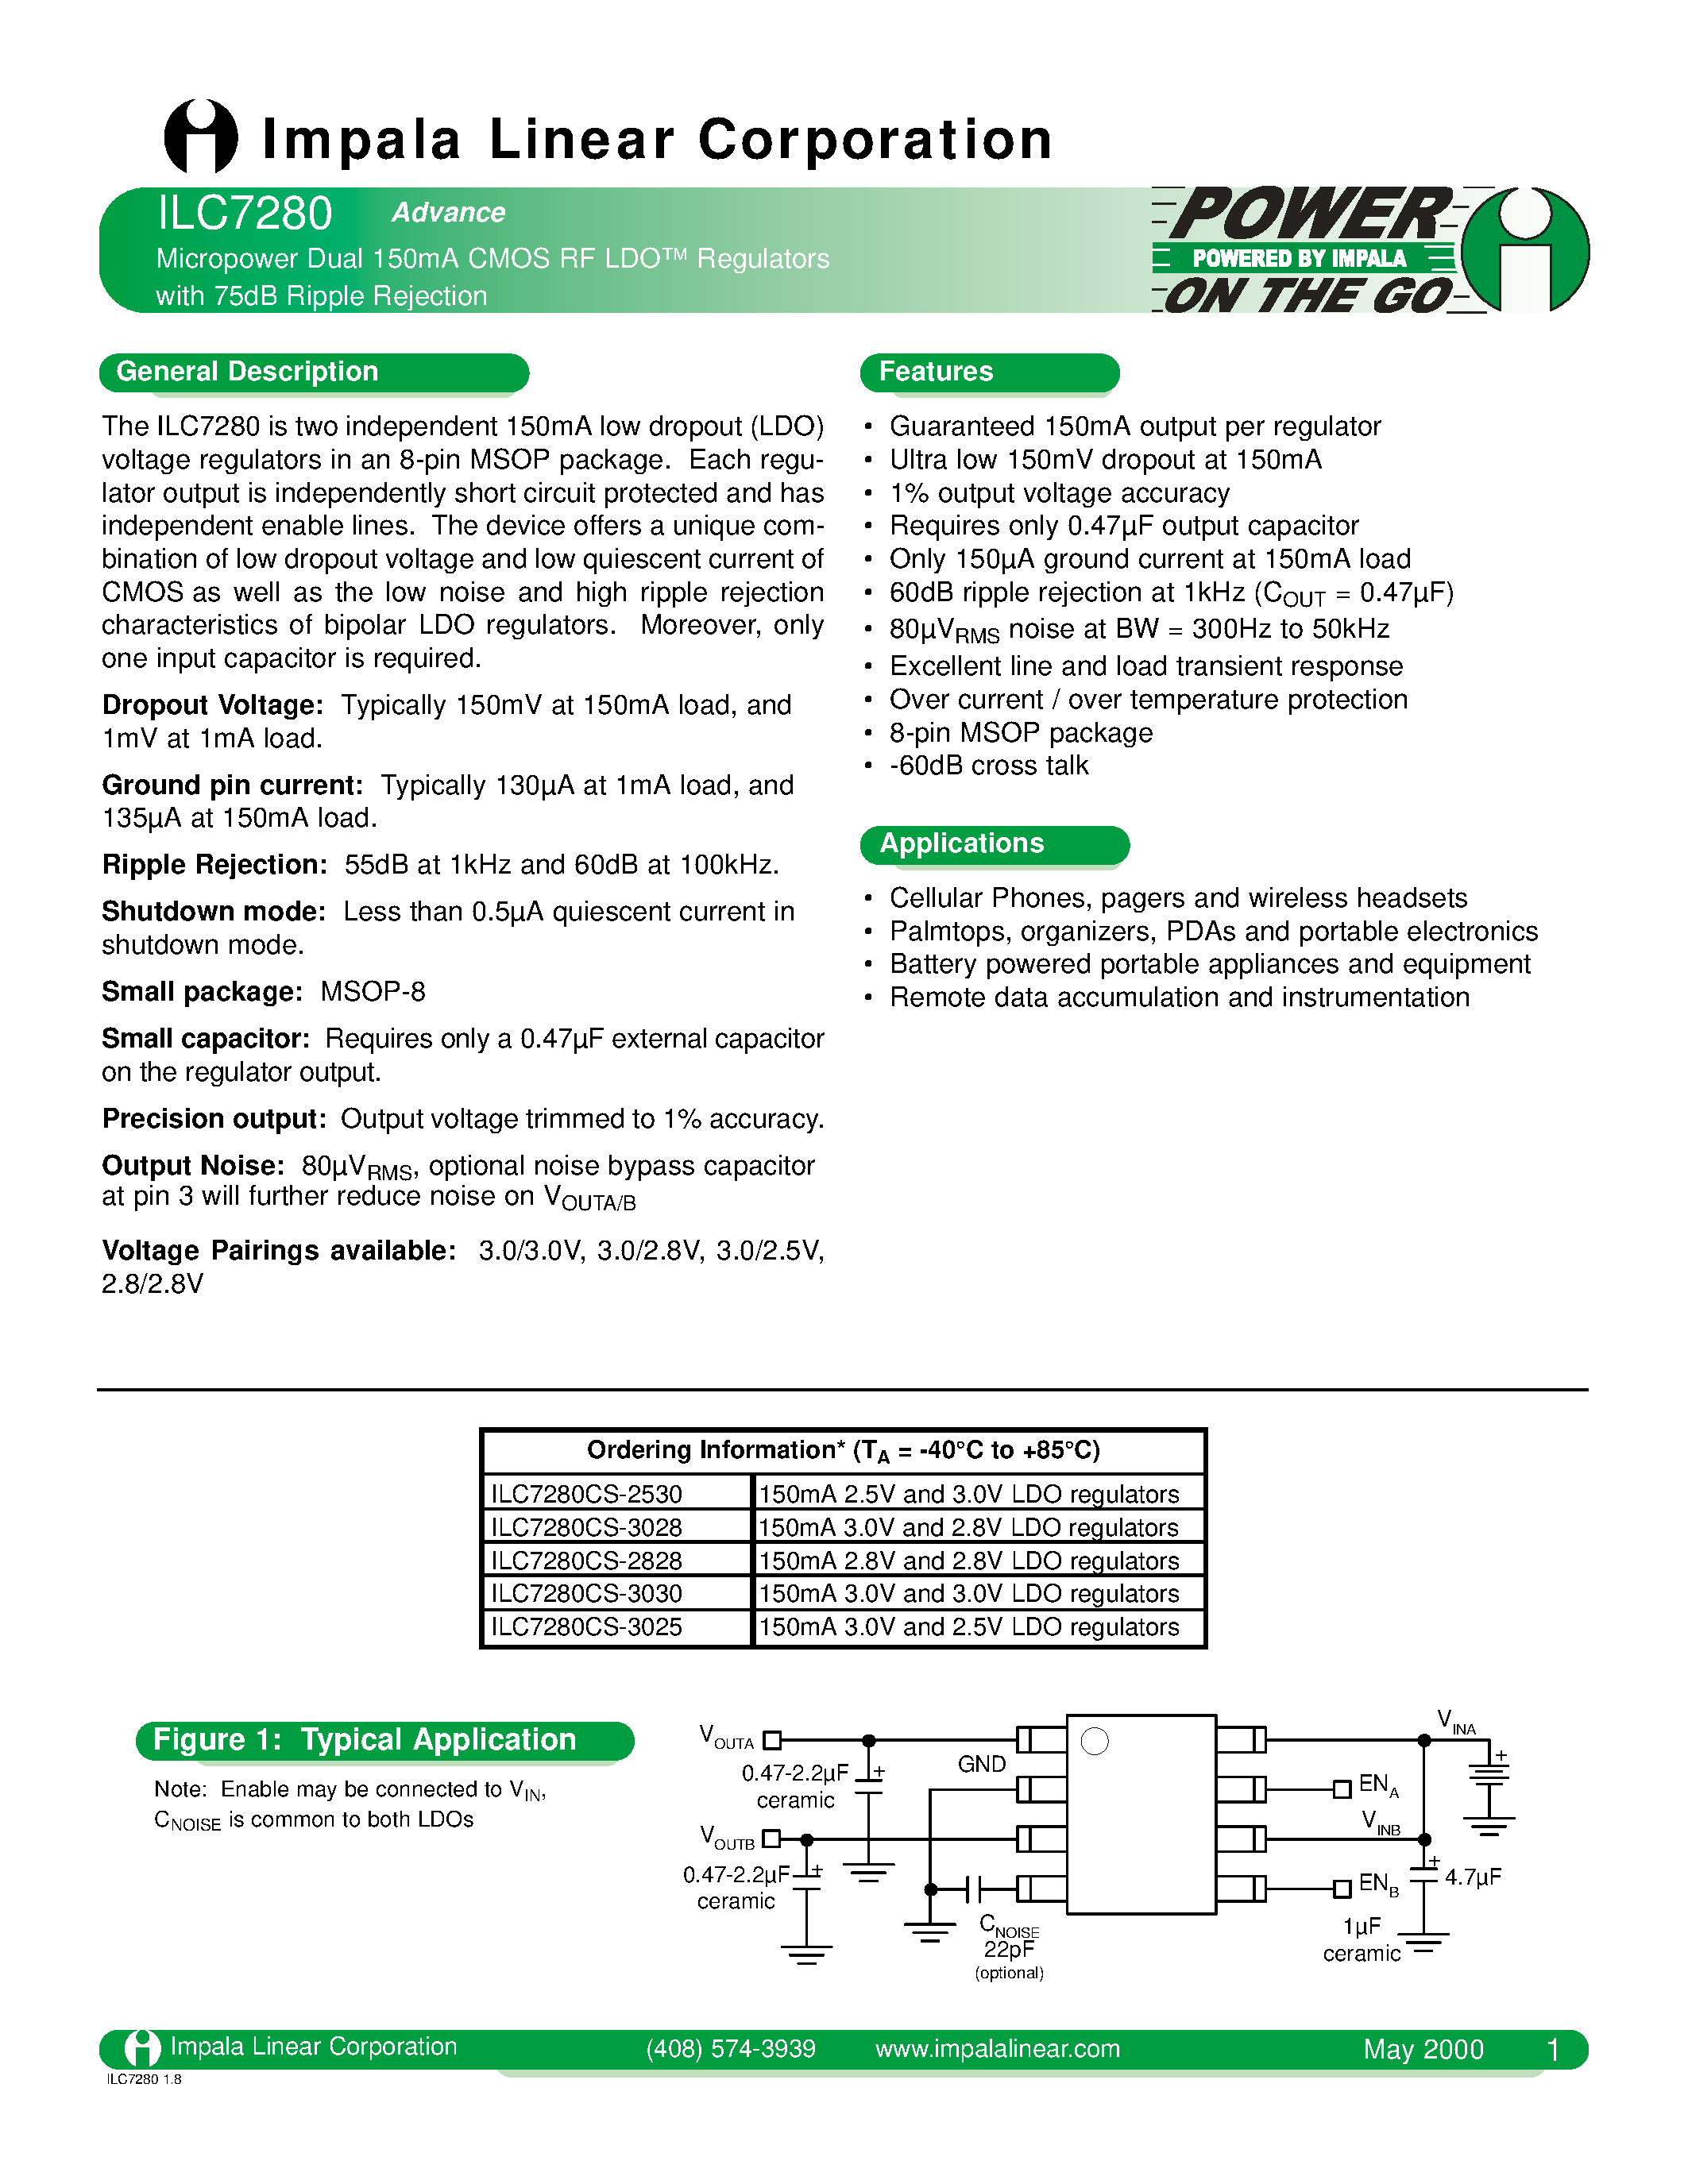 Datasheet ILC7280CS-2828 - MICROPOWER DUAL 150MA CMOS RF LDO REGULATORS WITH 75DB RIPPLE REJECTION page 1